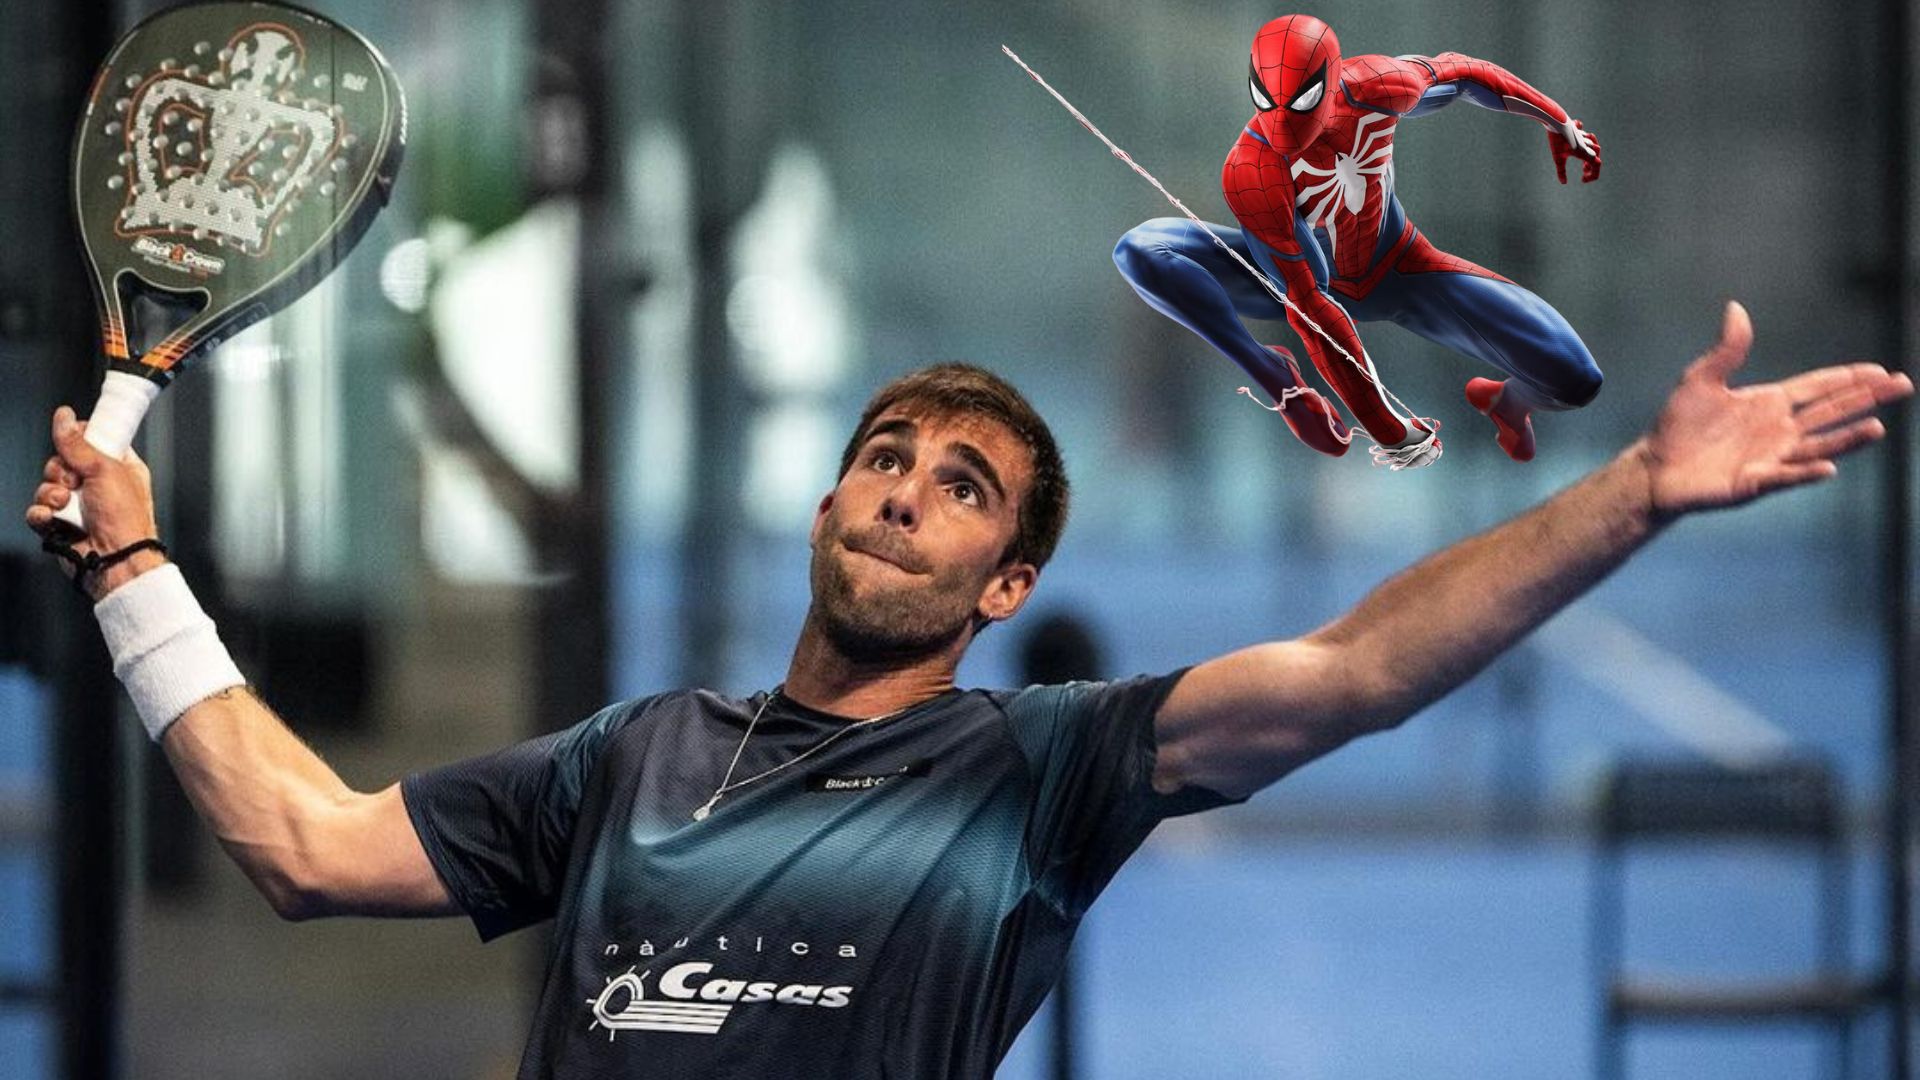 Video – When Aitor Garcia transforms into Spider-Man